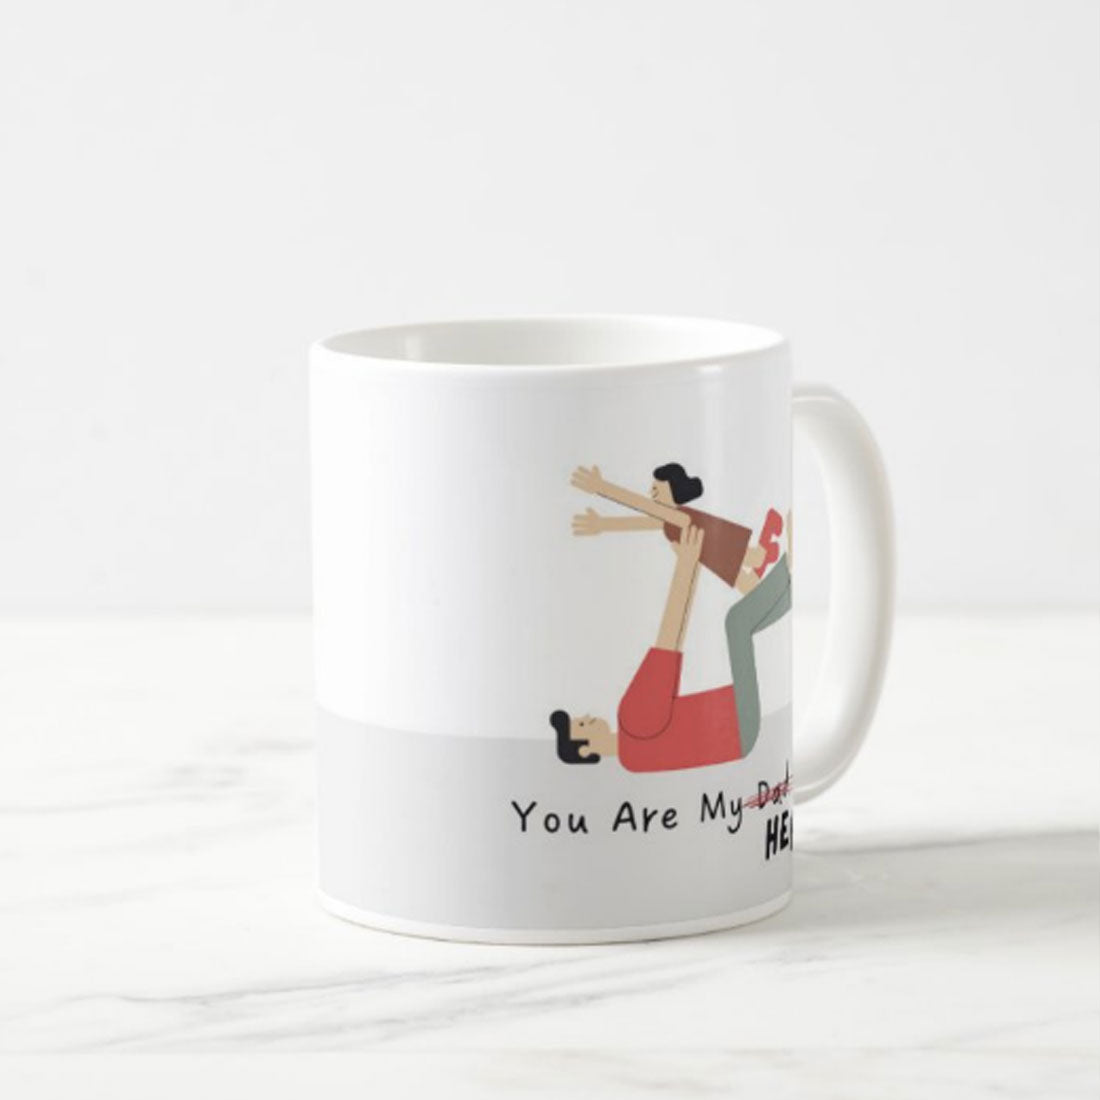 Father's Day Gift Idea from Daugher Printed Coffee Mug - Hero